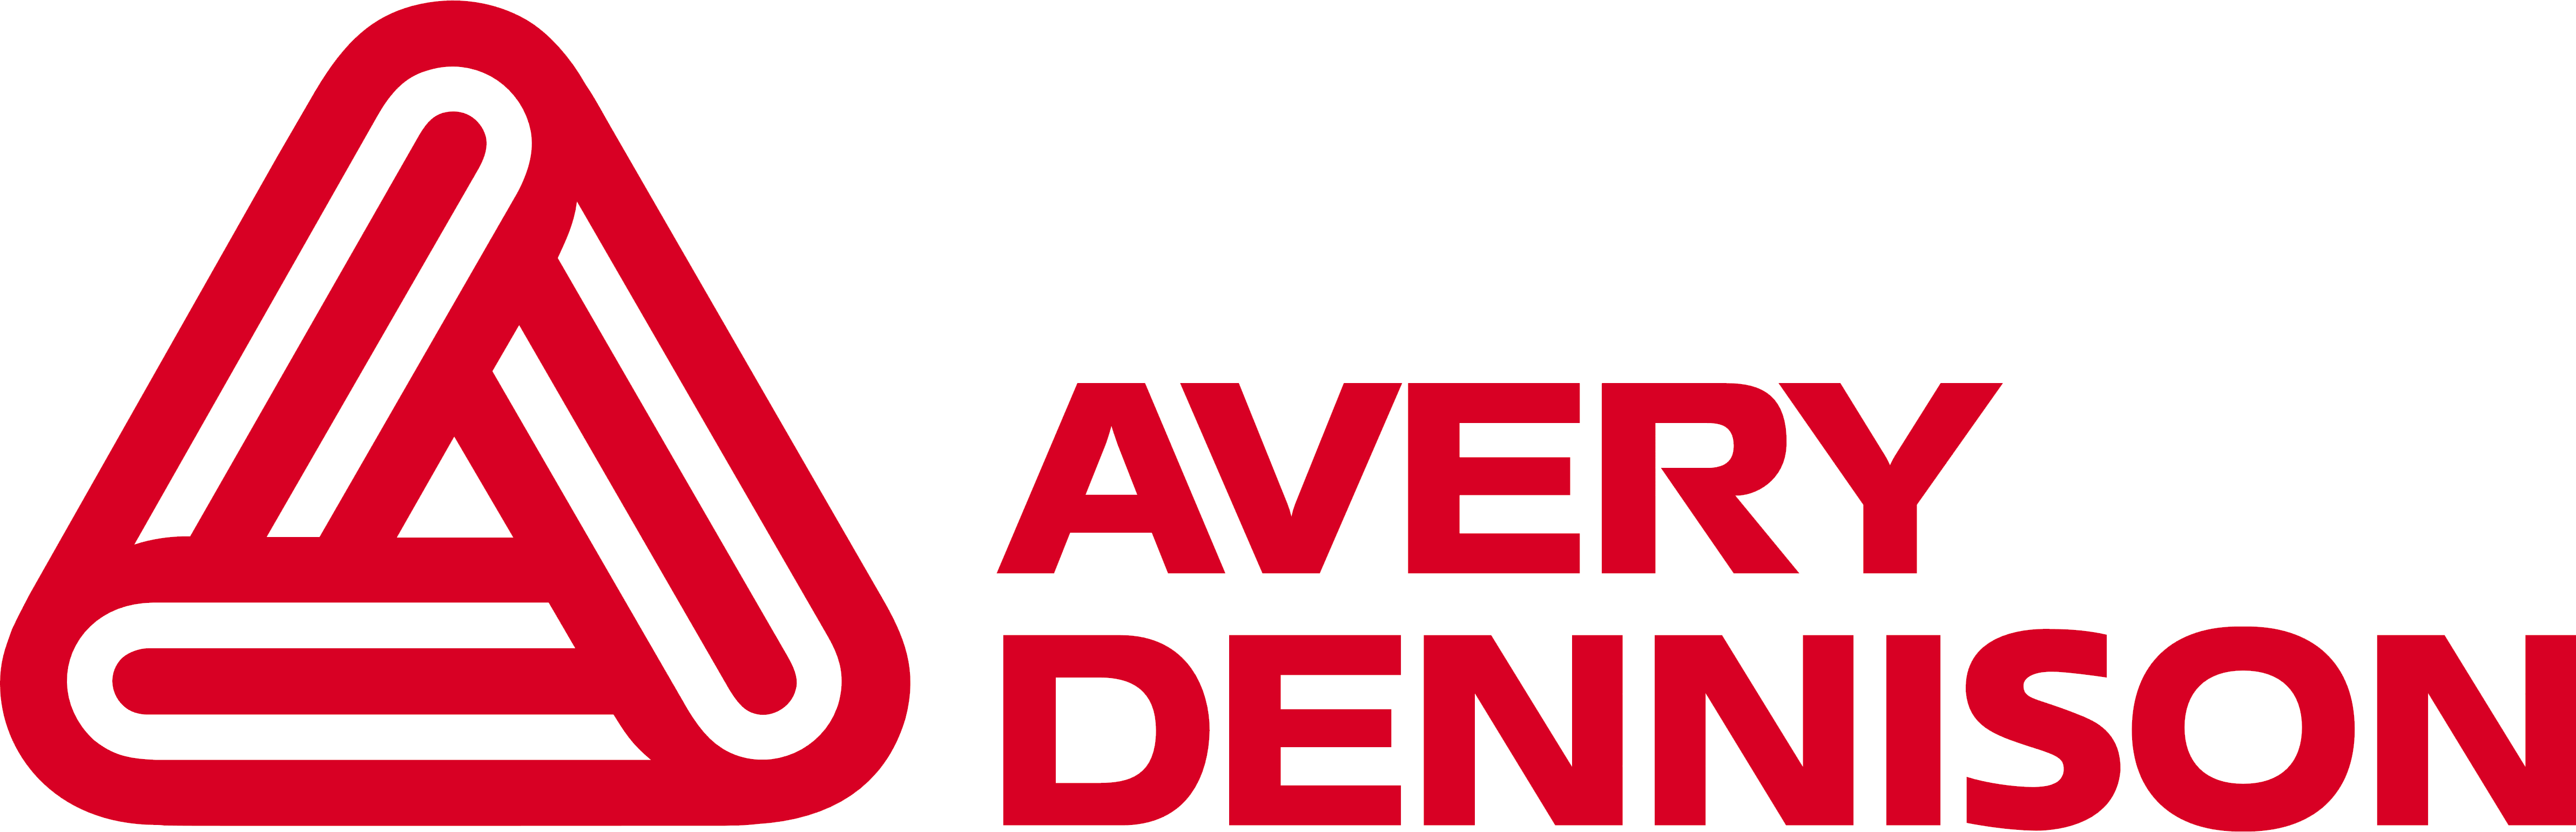 Avery_Dennison_logo_logotype